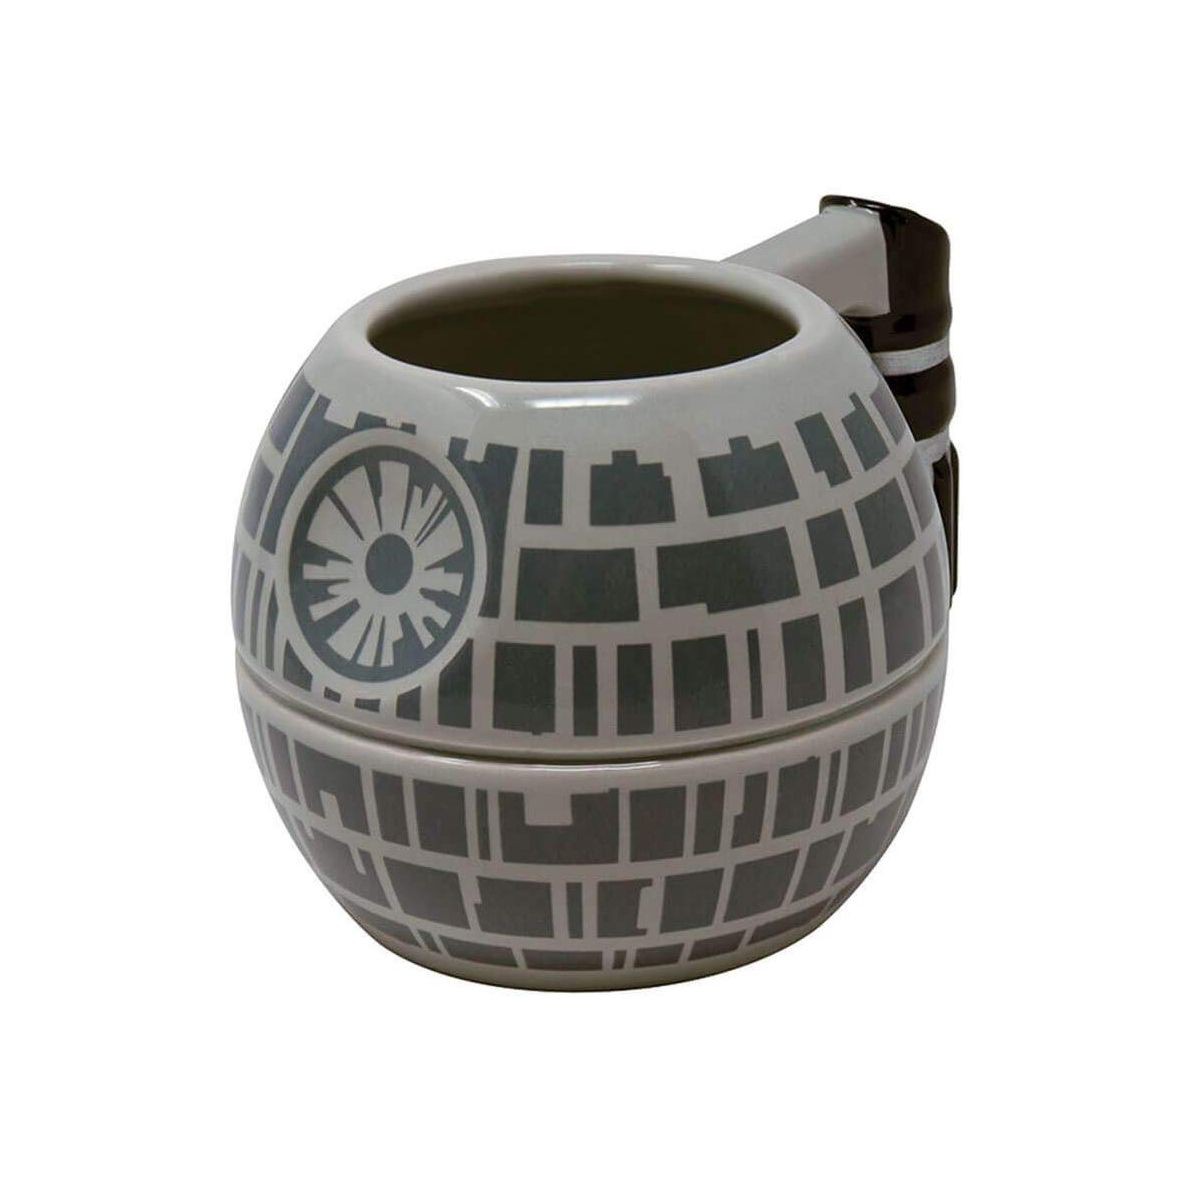 Star Wars (Death Star) Sculpted 3D Mug